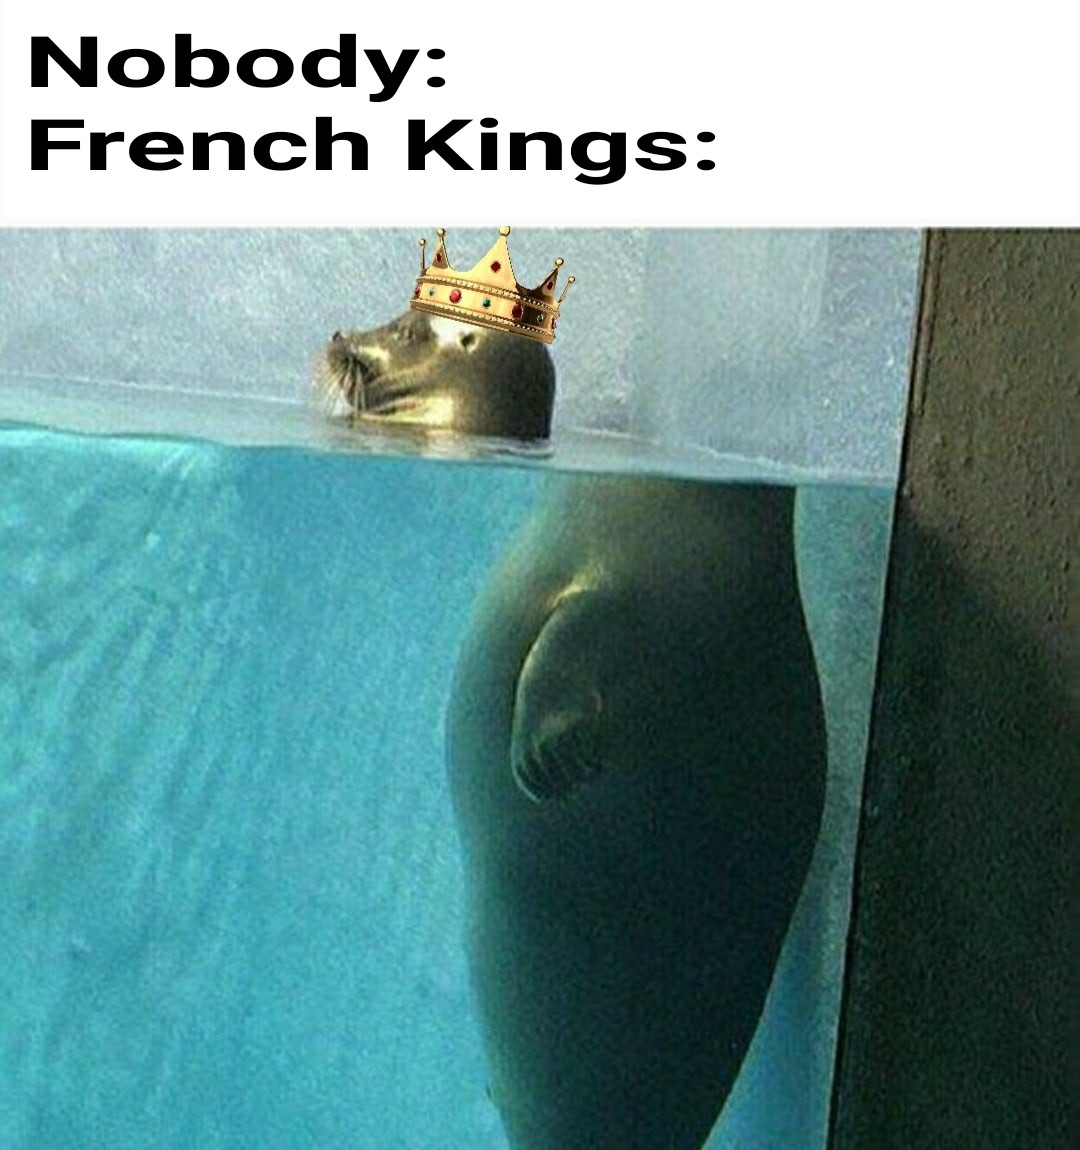 louis xvi memes - Nobody French Kings